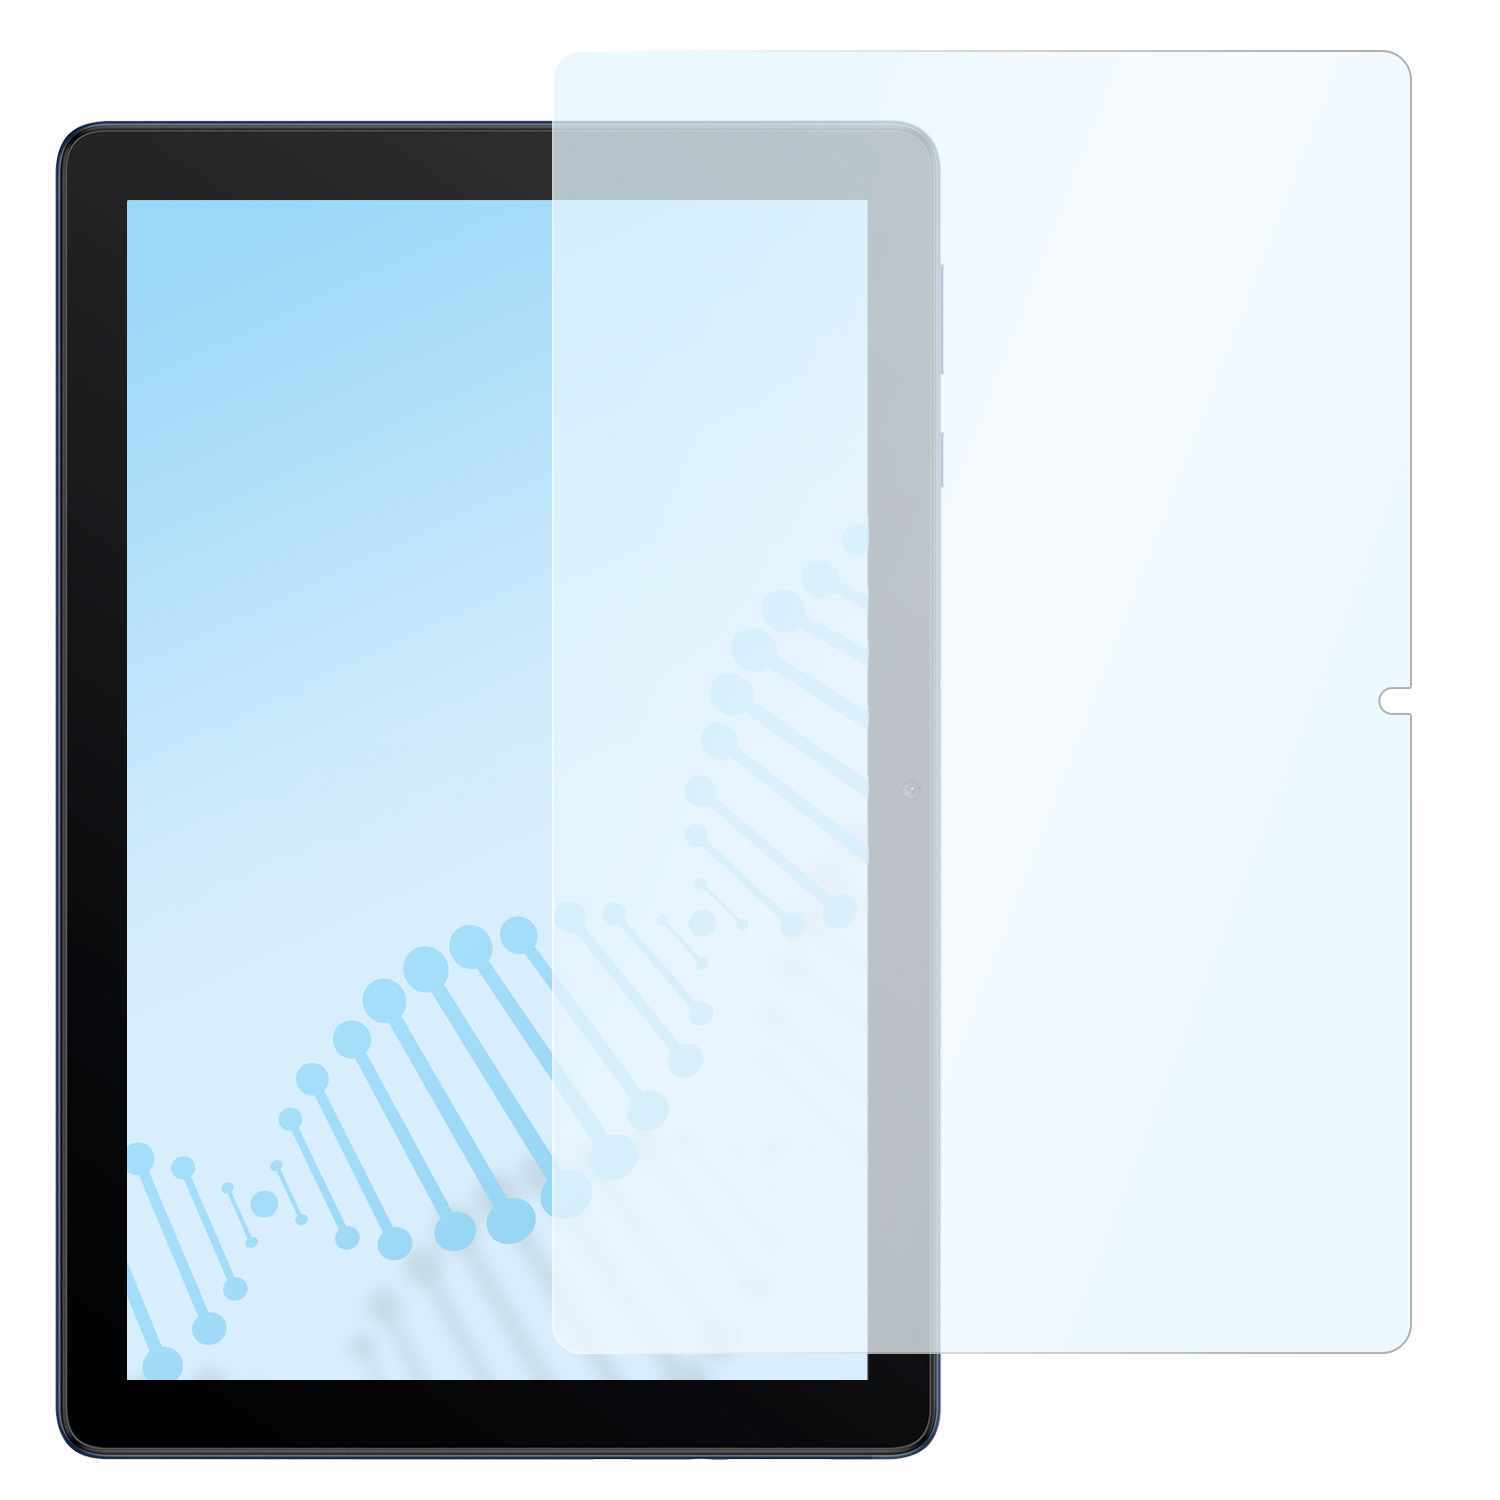 SLABO Huawei MatePad antibakterielle Displayschutz(für T10 MatePad | flexible T10s) Hybridglasfolie